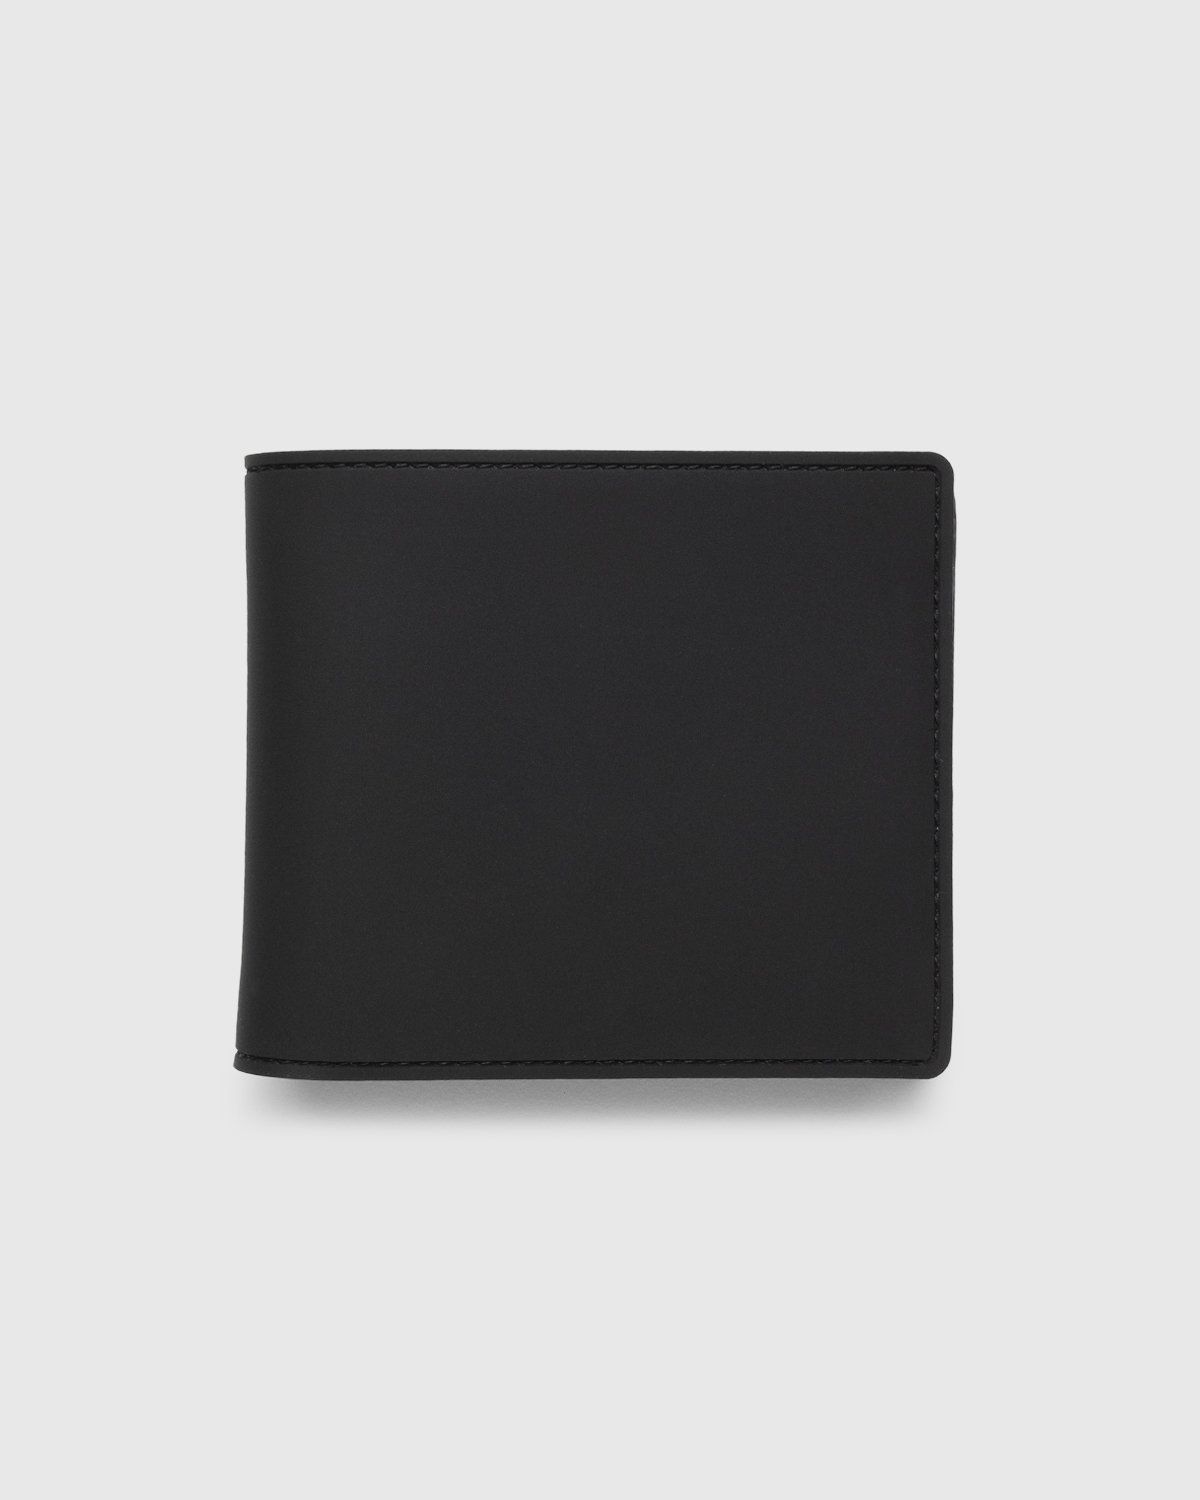 Maison Margiela – Bi-Fold Wallet Black - Image 2